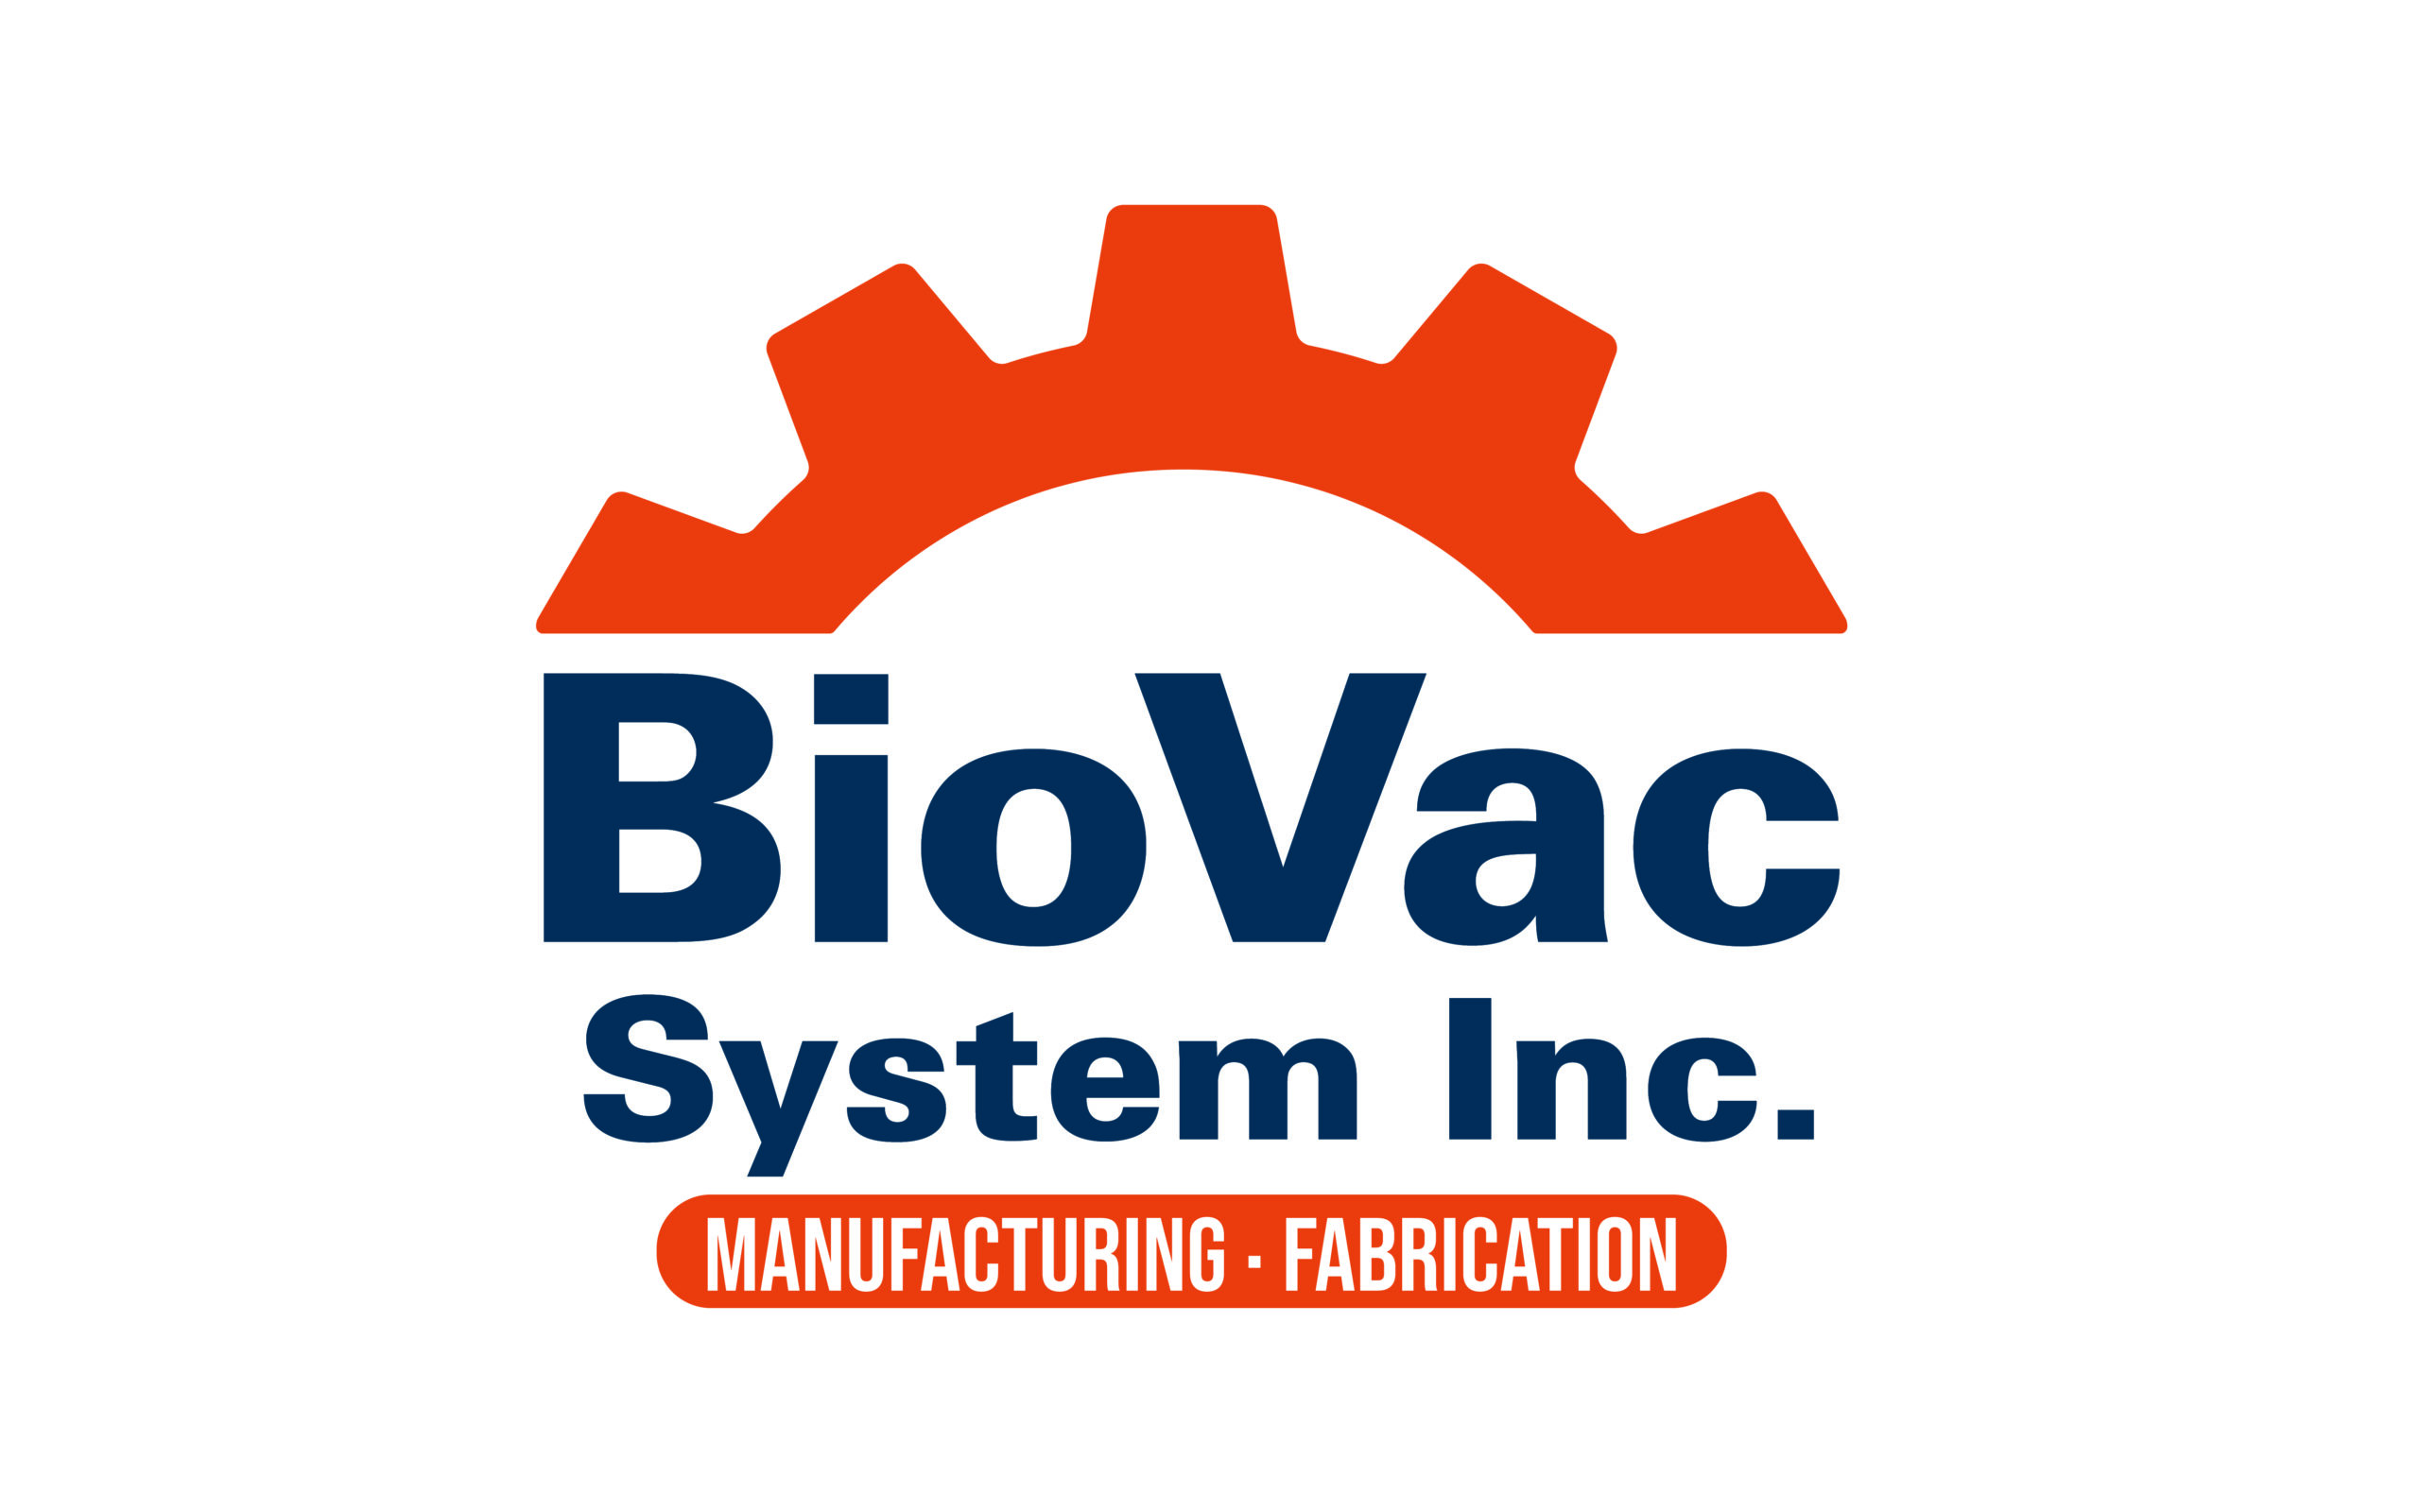 BioVac System, Inc.